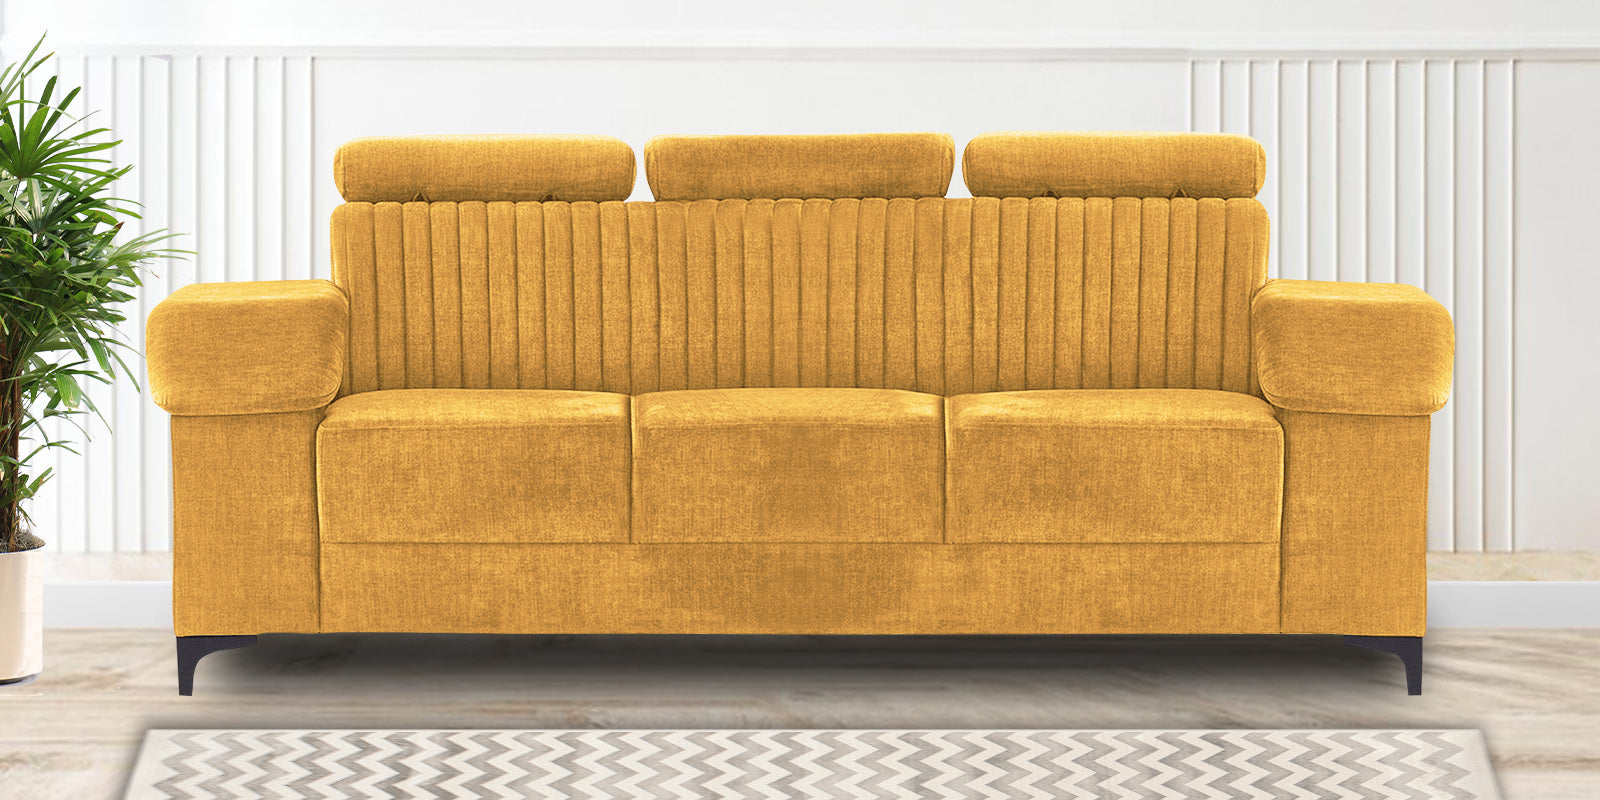 Draco Fabric 3 Seater Sofa in Blush Yellow Colour